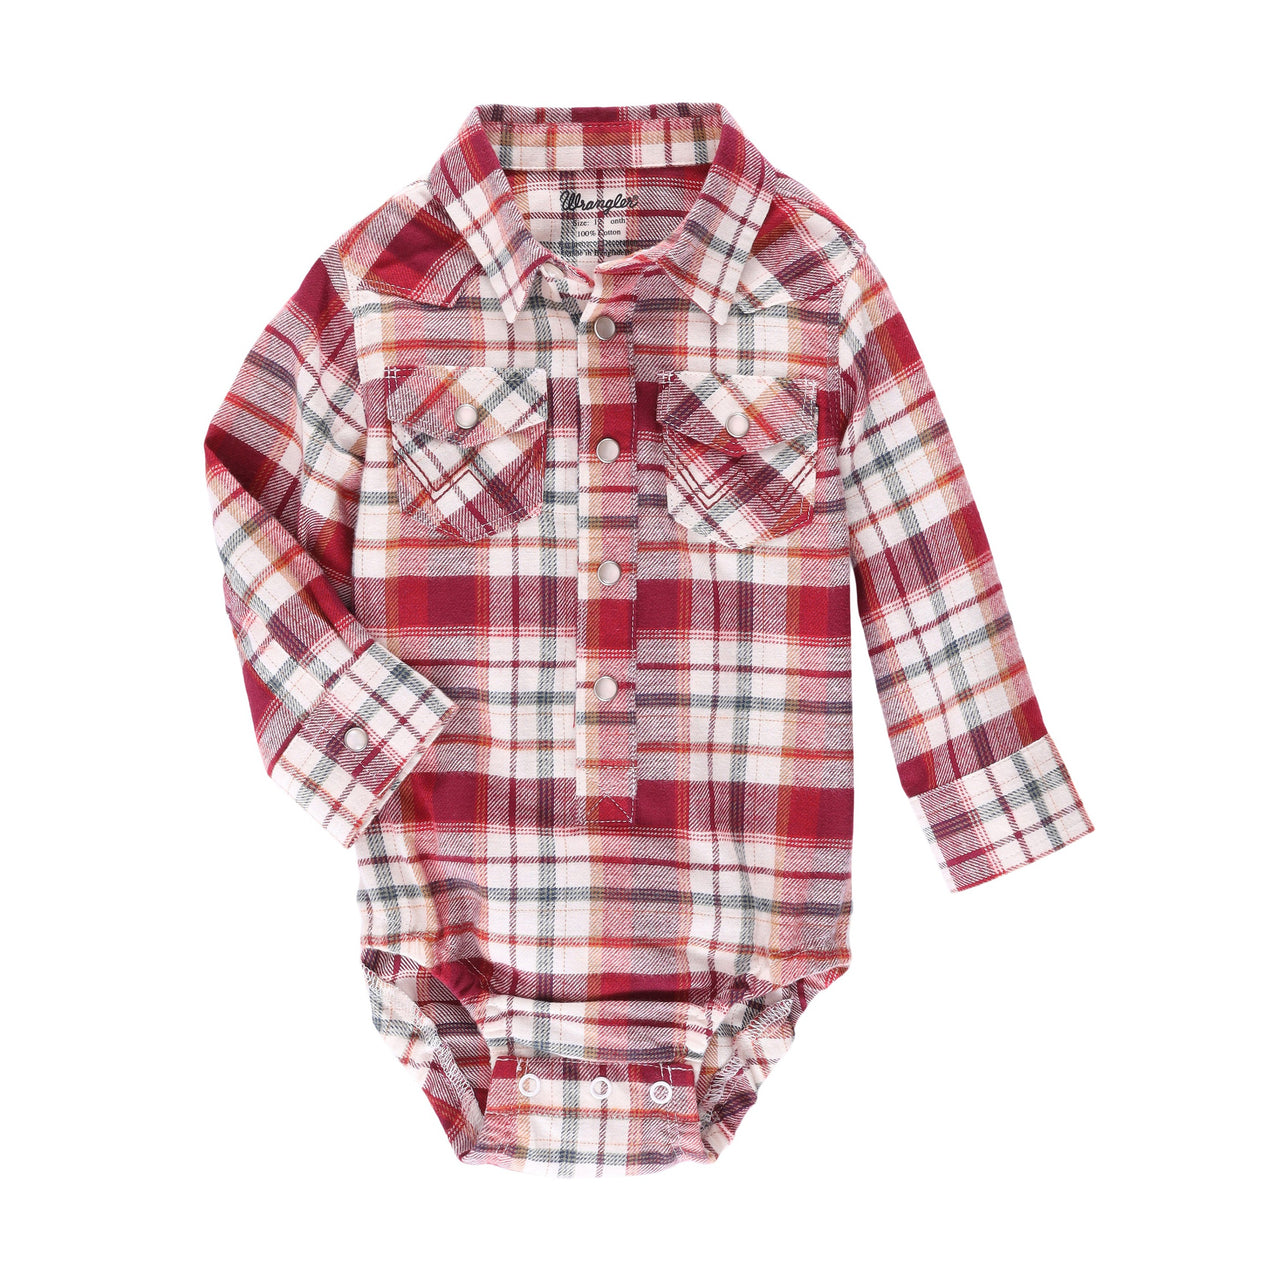 Wrangler Baby Boy's Bodysuit - Red